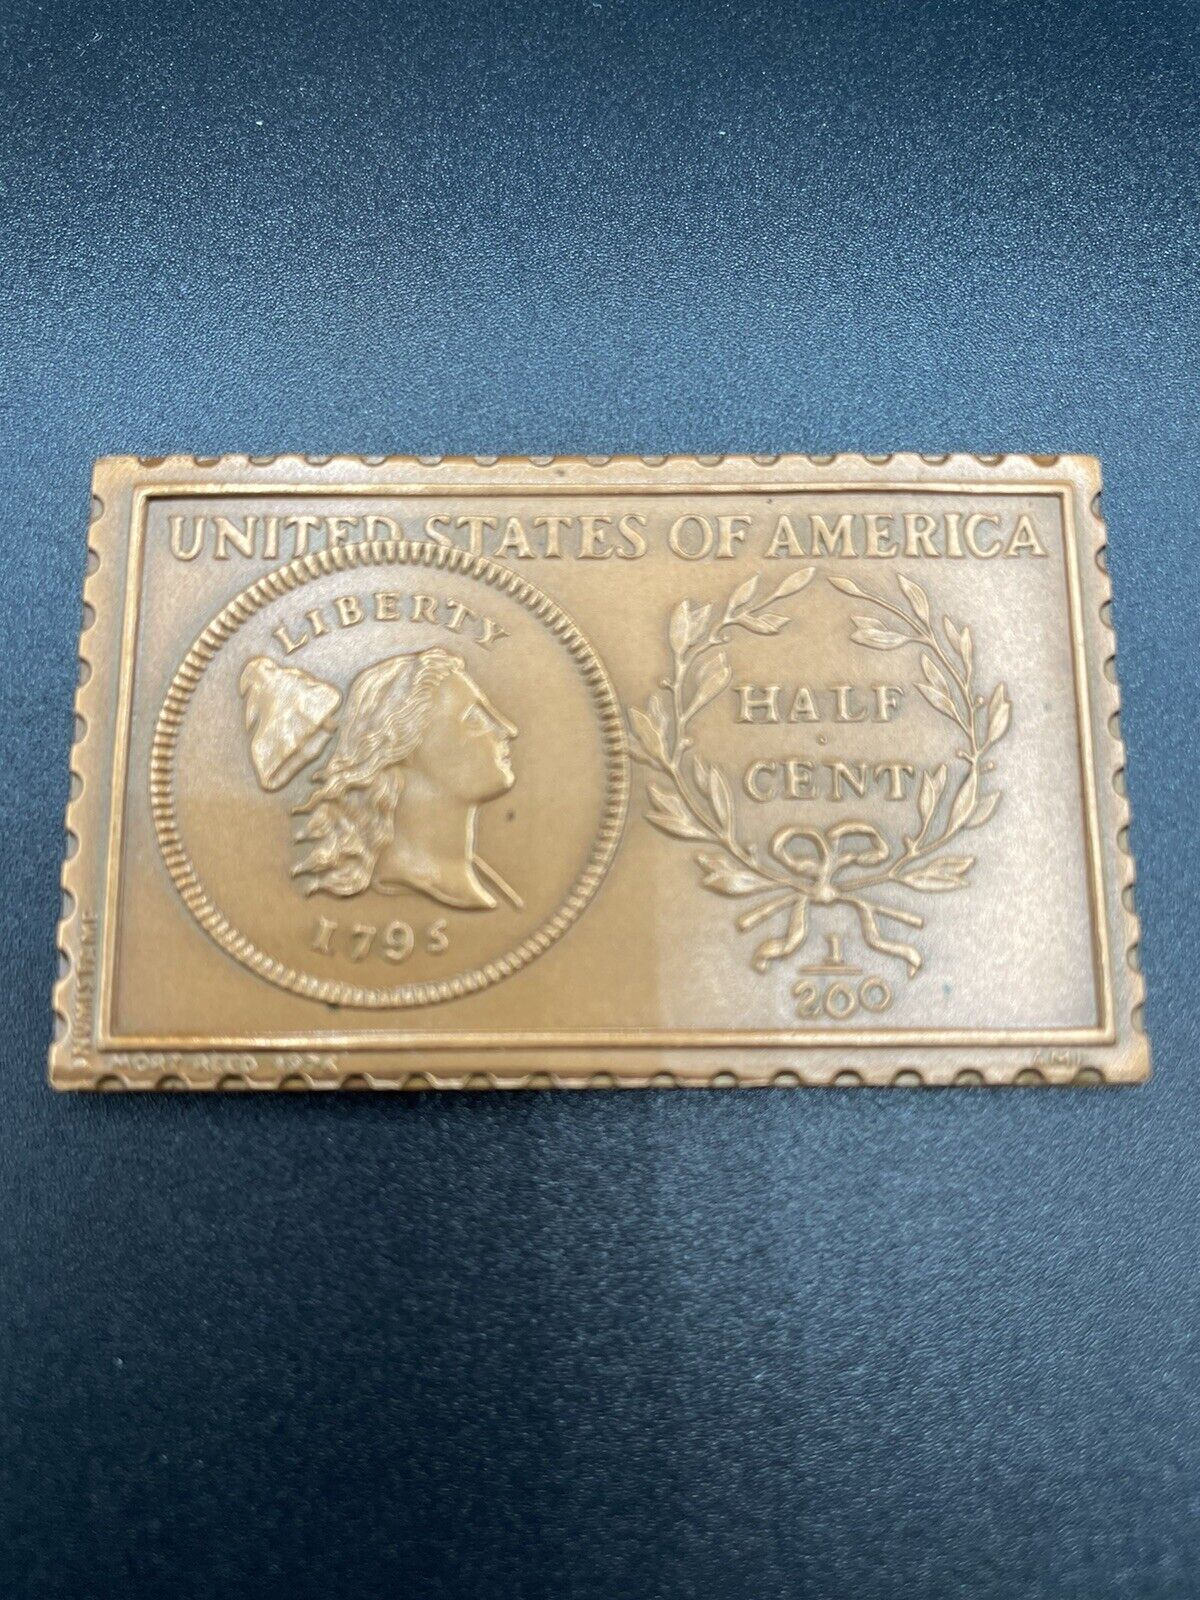 1795 U.S. Numistamp, Liberty Cap 1/2 Half Cent, SERIAL #413  1976 Mort Reed